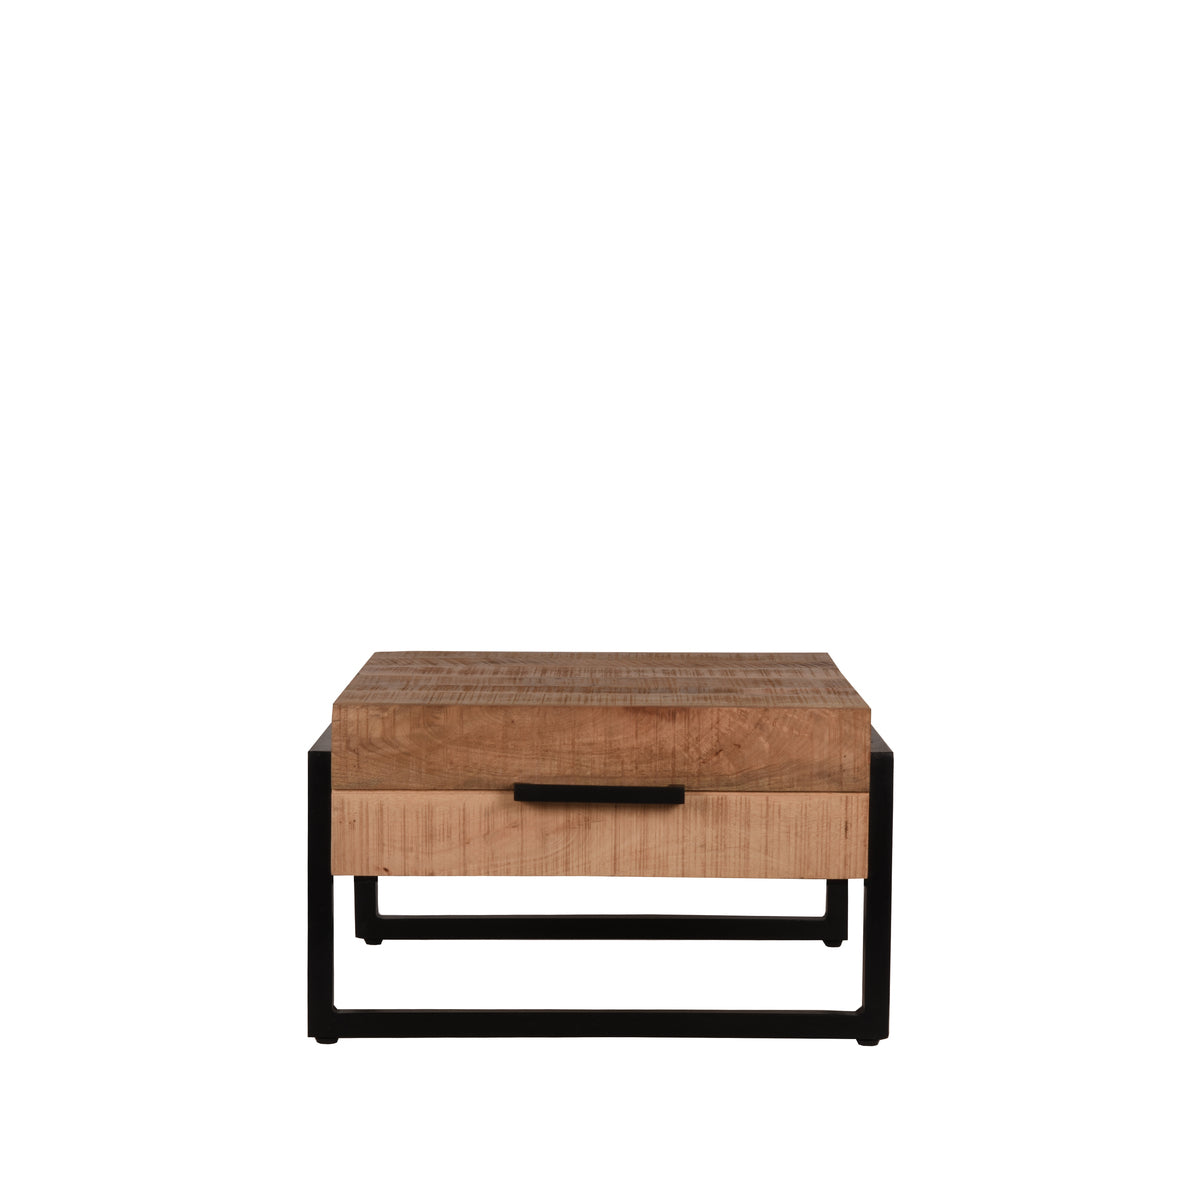 LABEL51 Coffee table Bolivia - Rough - Mango wood - 70 cm